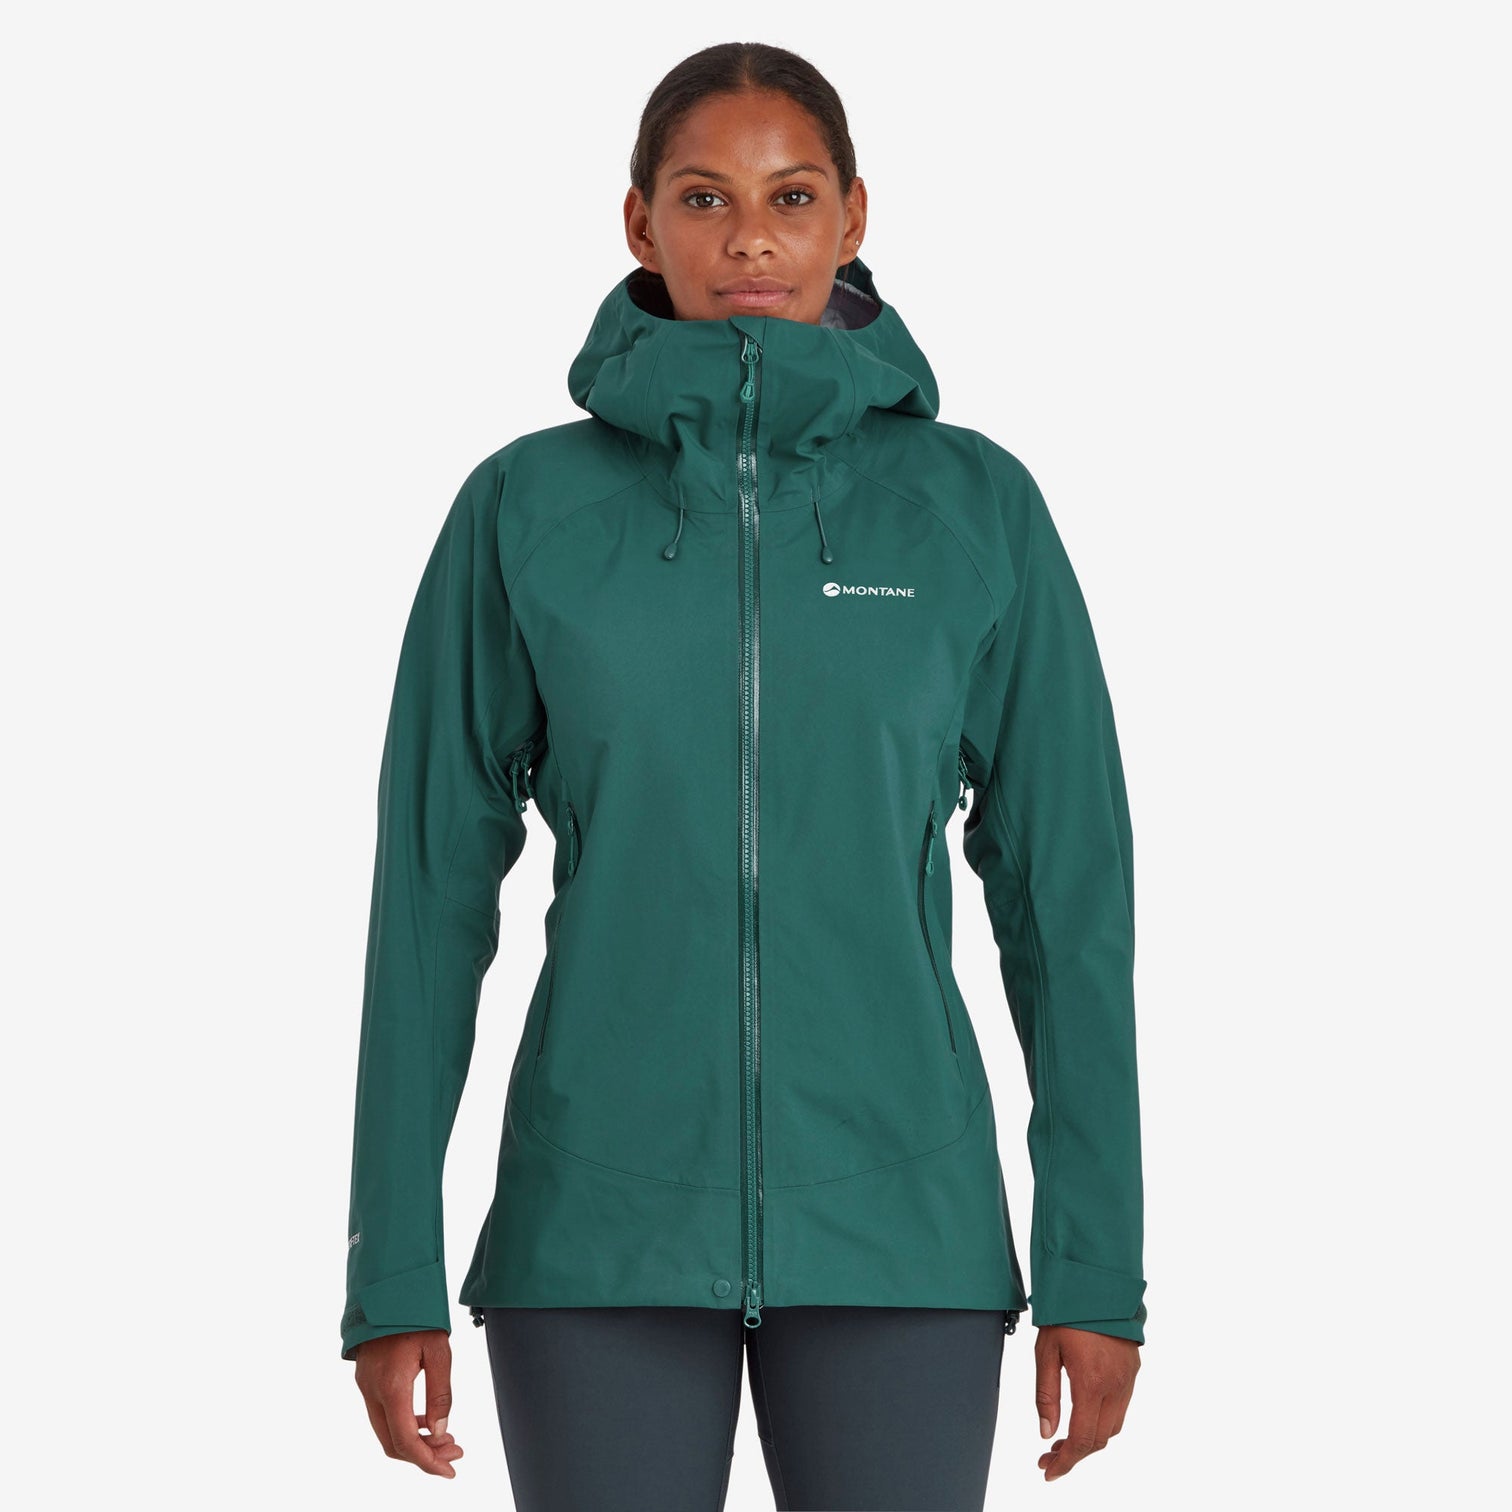 Womens Waterproof Jackets and Rain Coats, Lightweight & Breathable ...